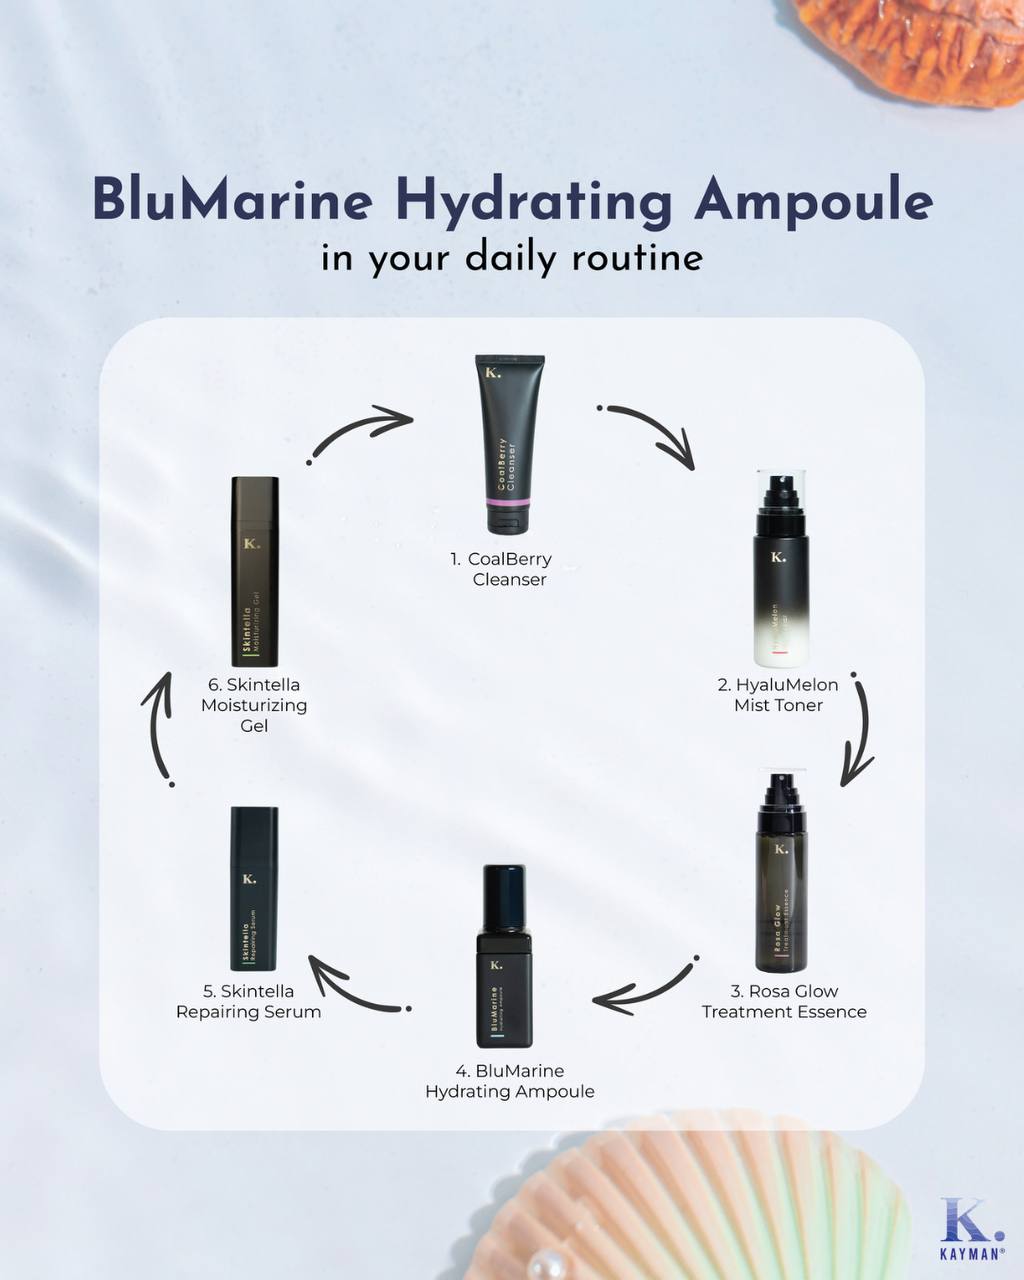 BluMarine Hydrating Ampoule